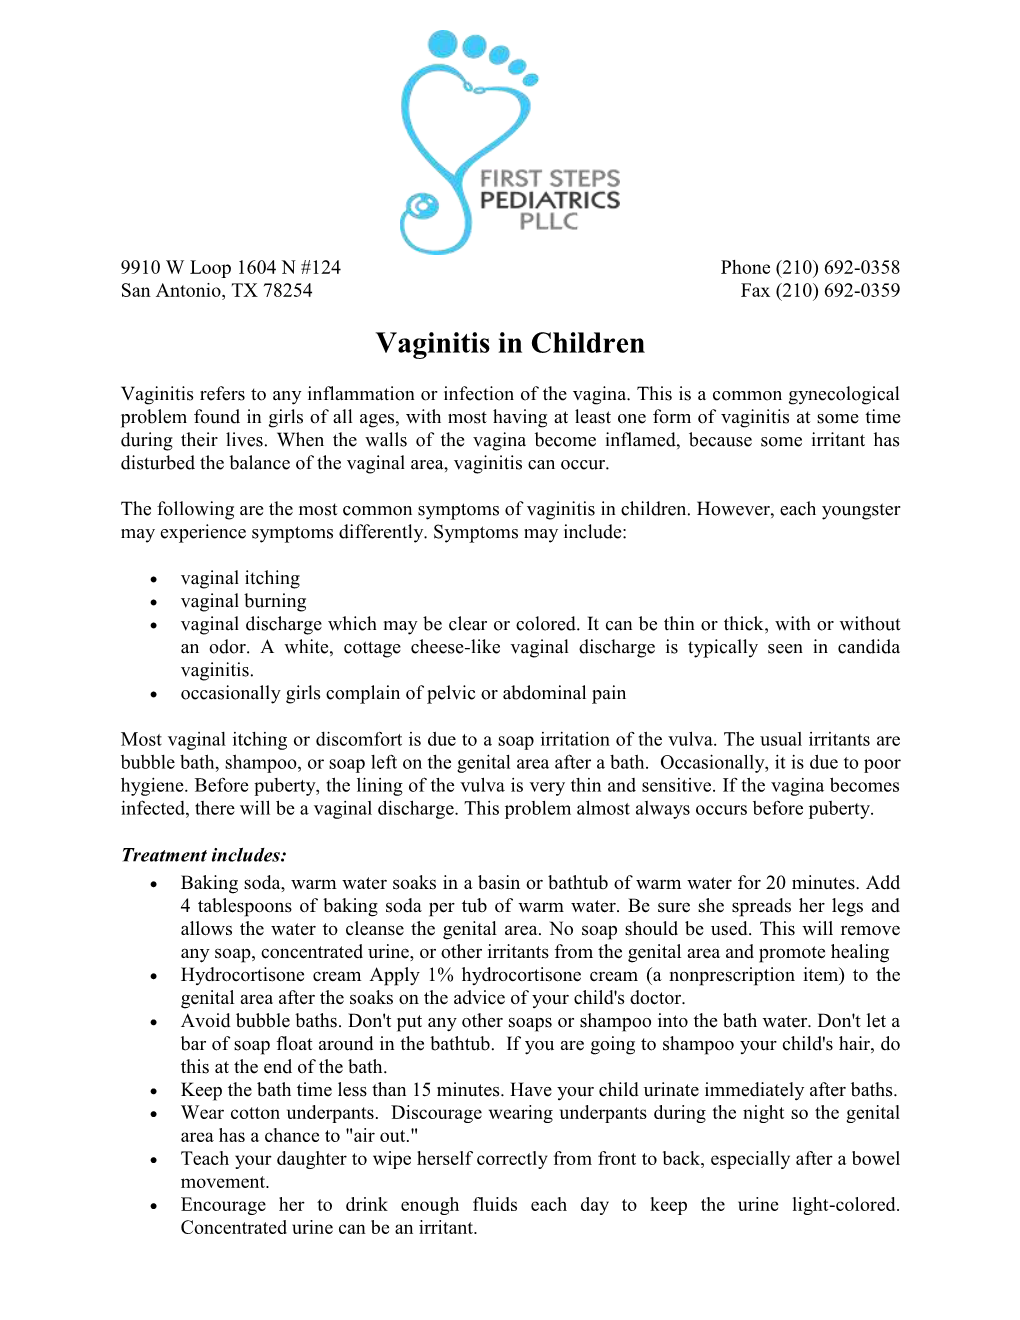 Vaginitis in Children